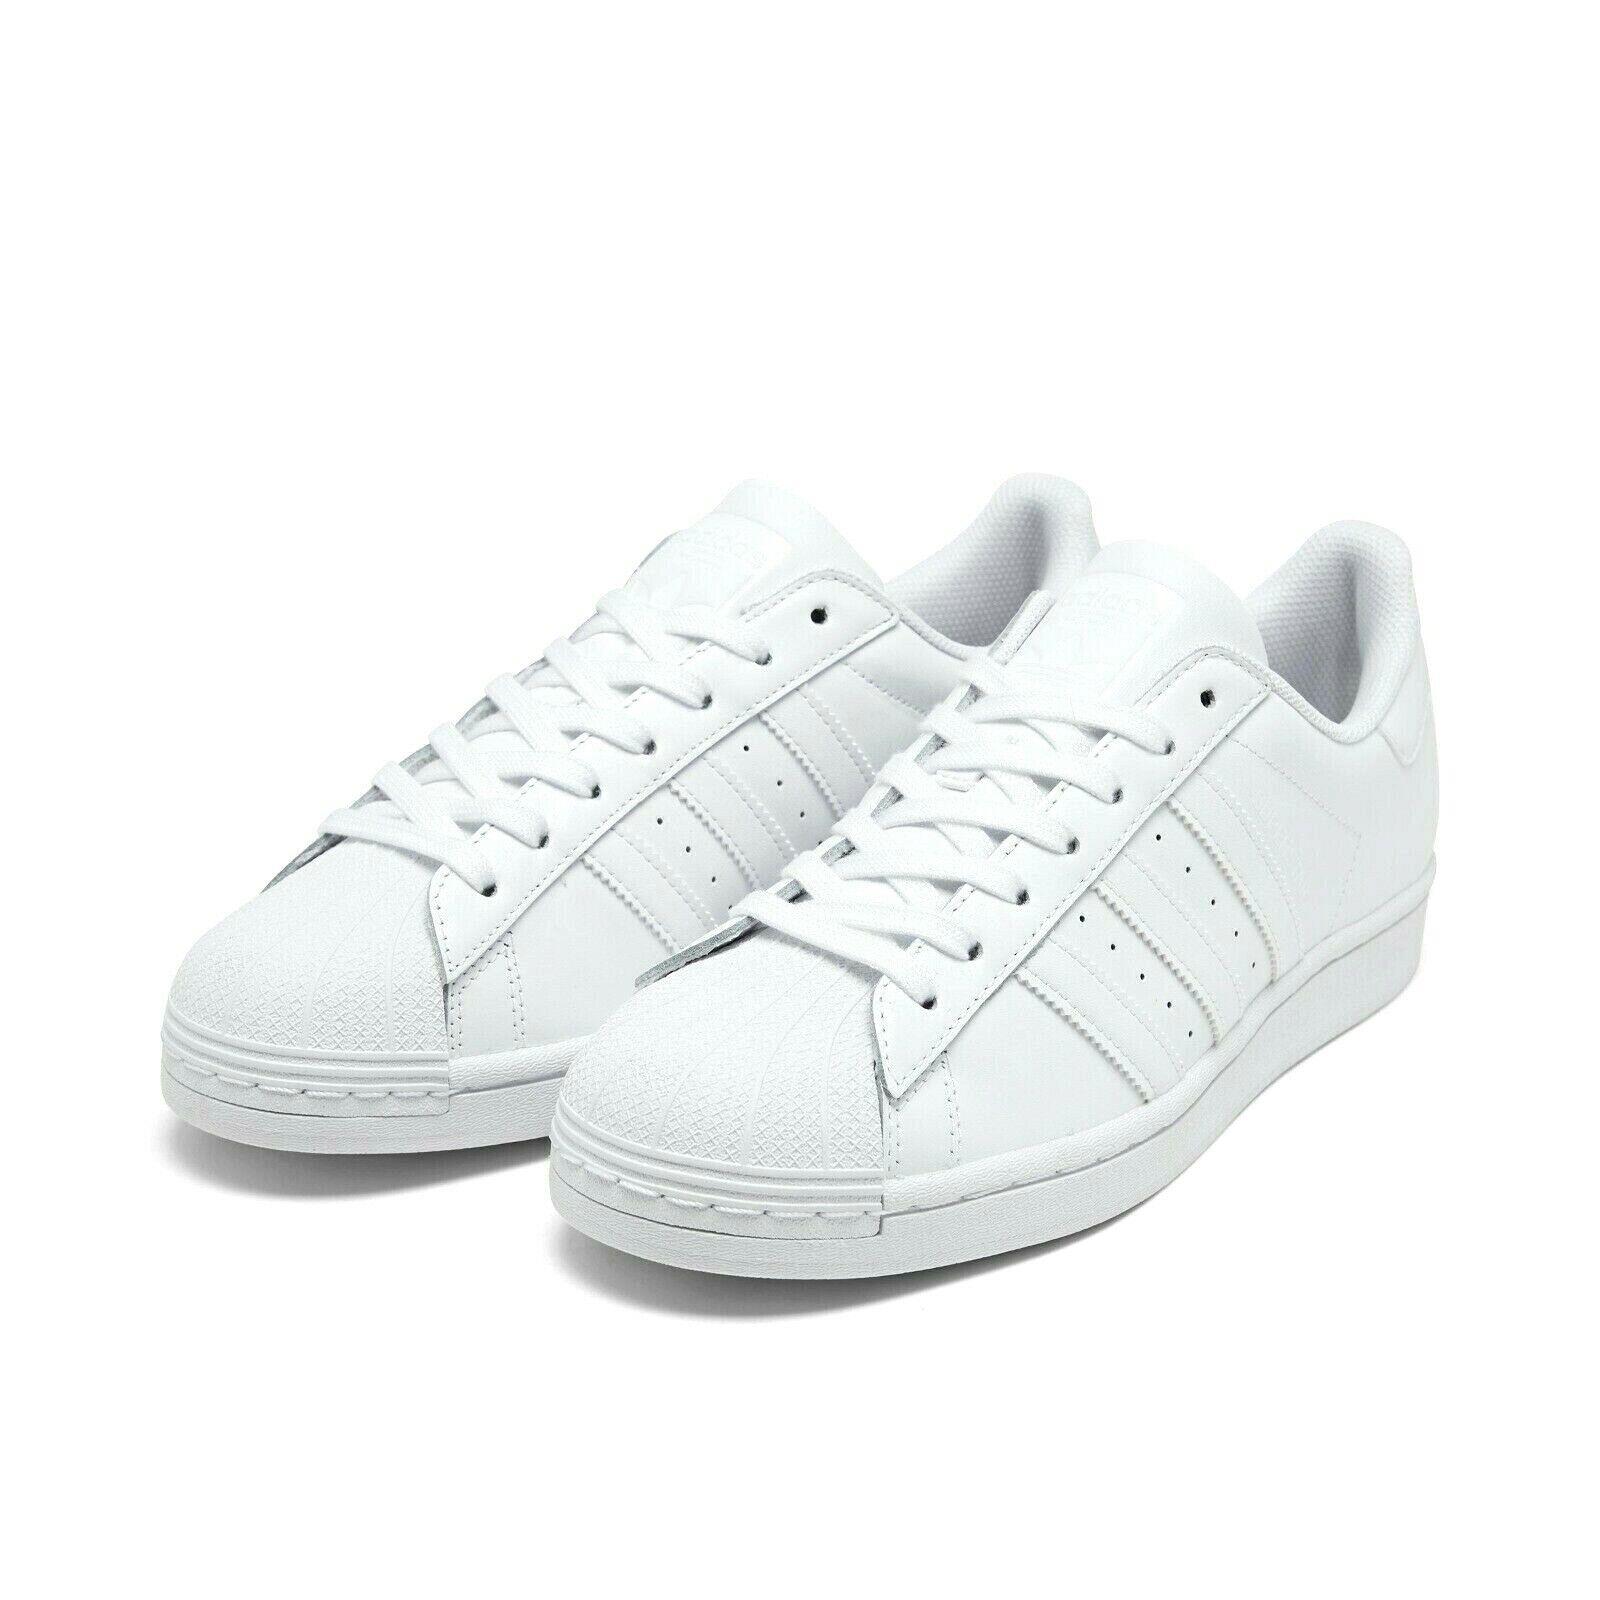 Mens Adidas Originals Superstar Cloud White Leather Trefoil Shoes